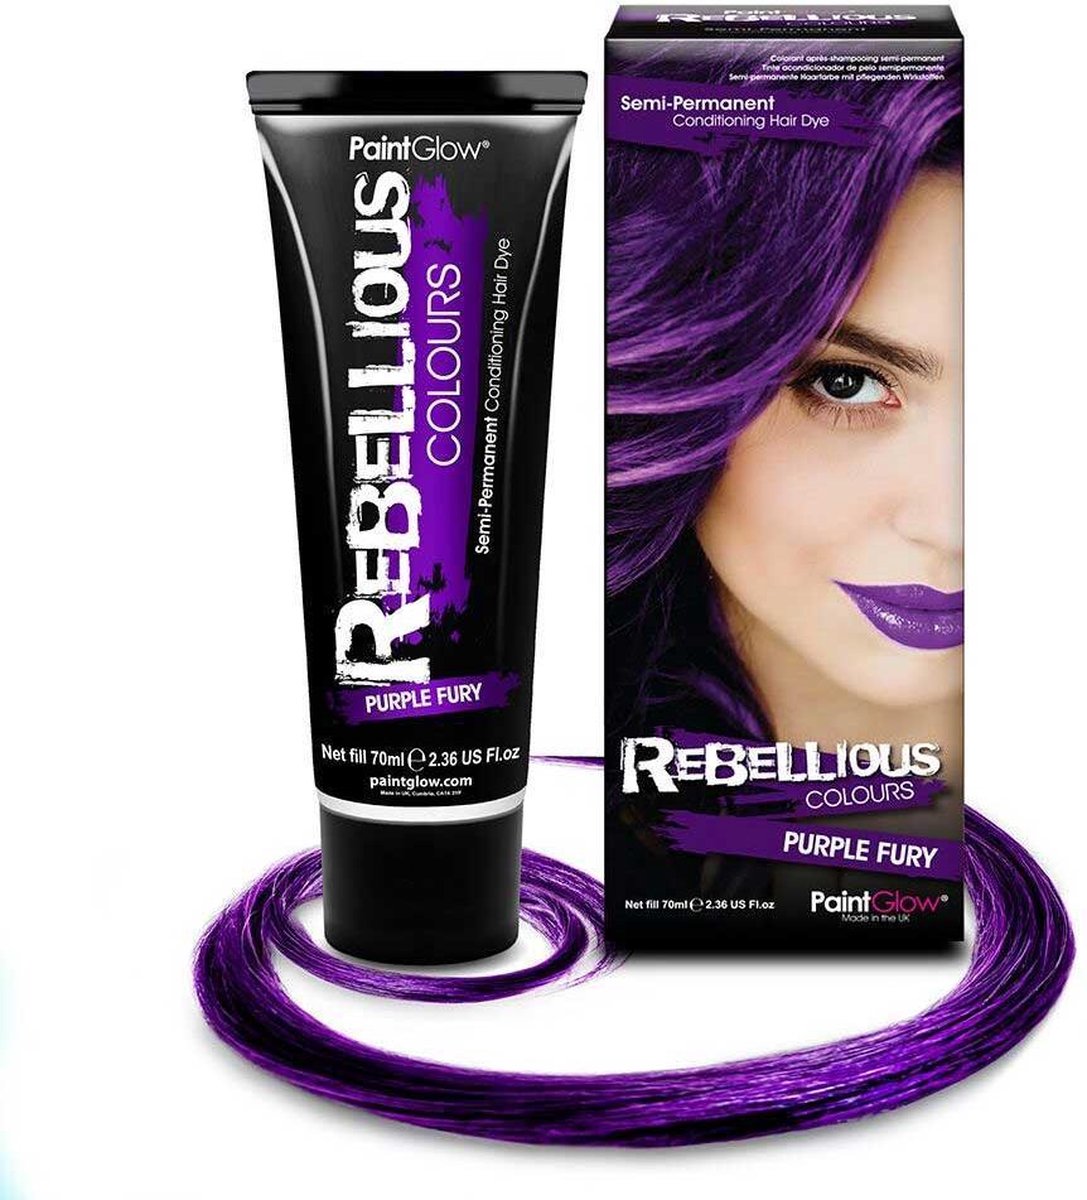 Purple permanente - Rebellious Colours bol.com